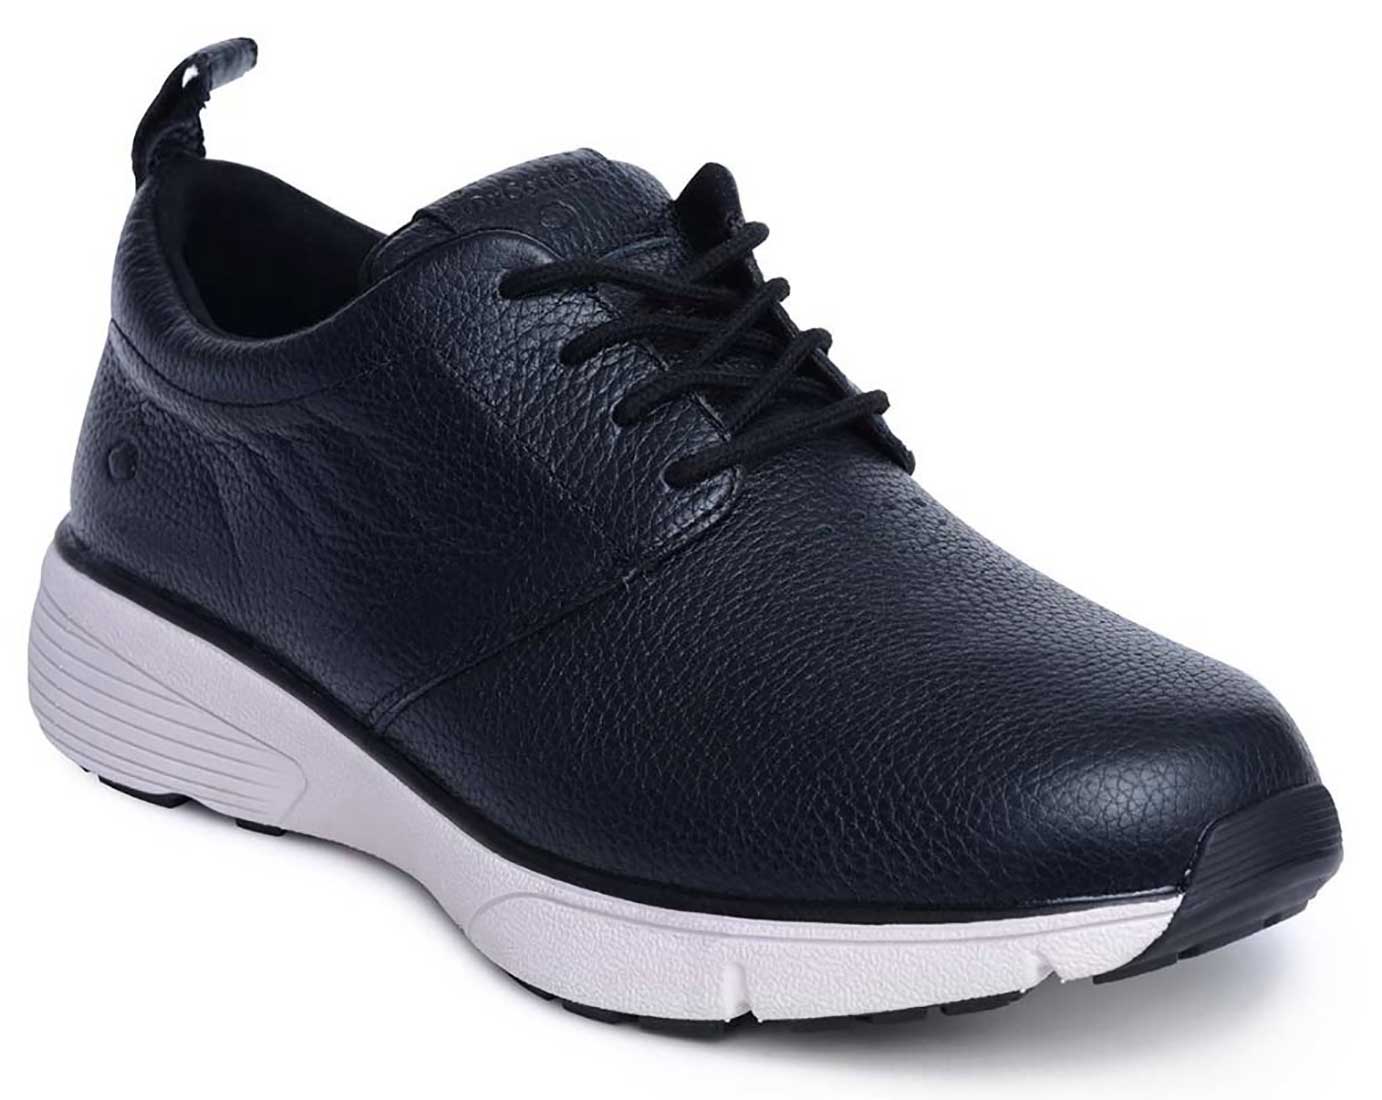 Dr. Comfort Shoes Roger 10400 Men's Athletic Shoe - Comfort Orthopedic Diabetic Shoe - Extra Depth For Orthotics - Extra Wide